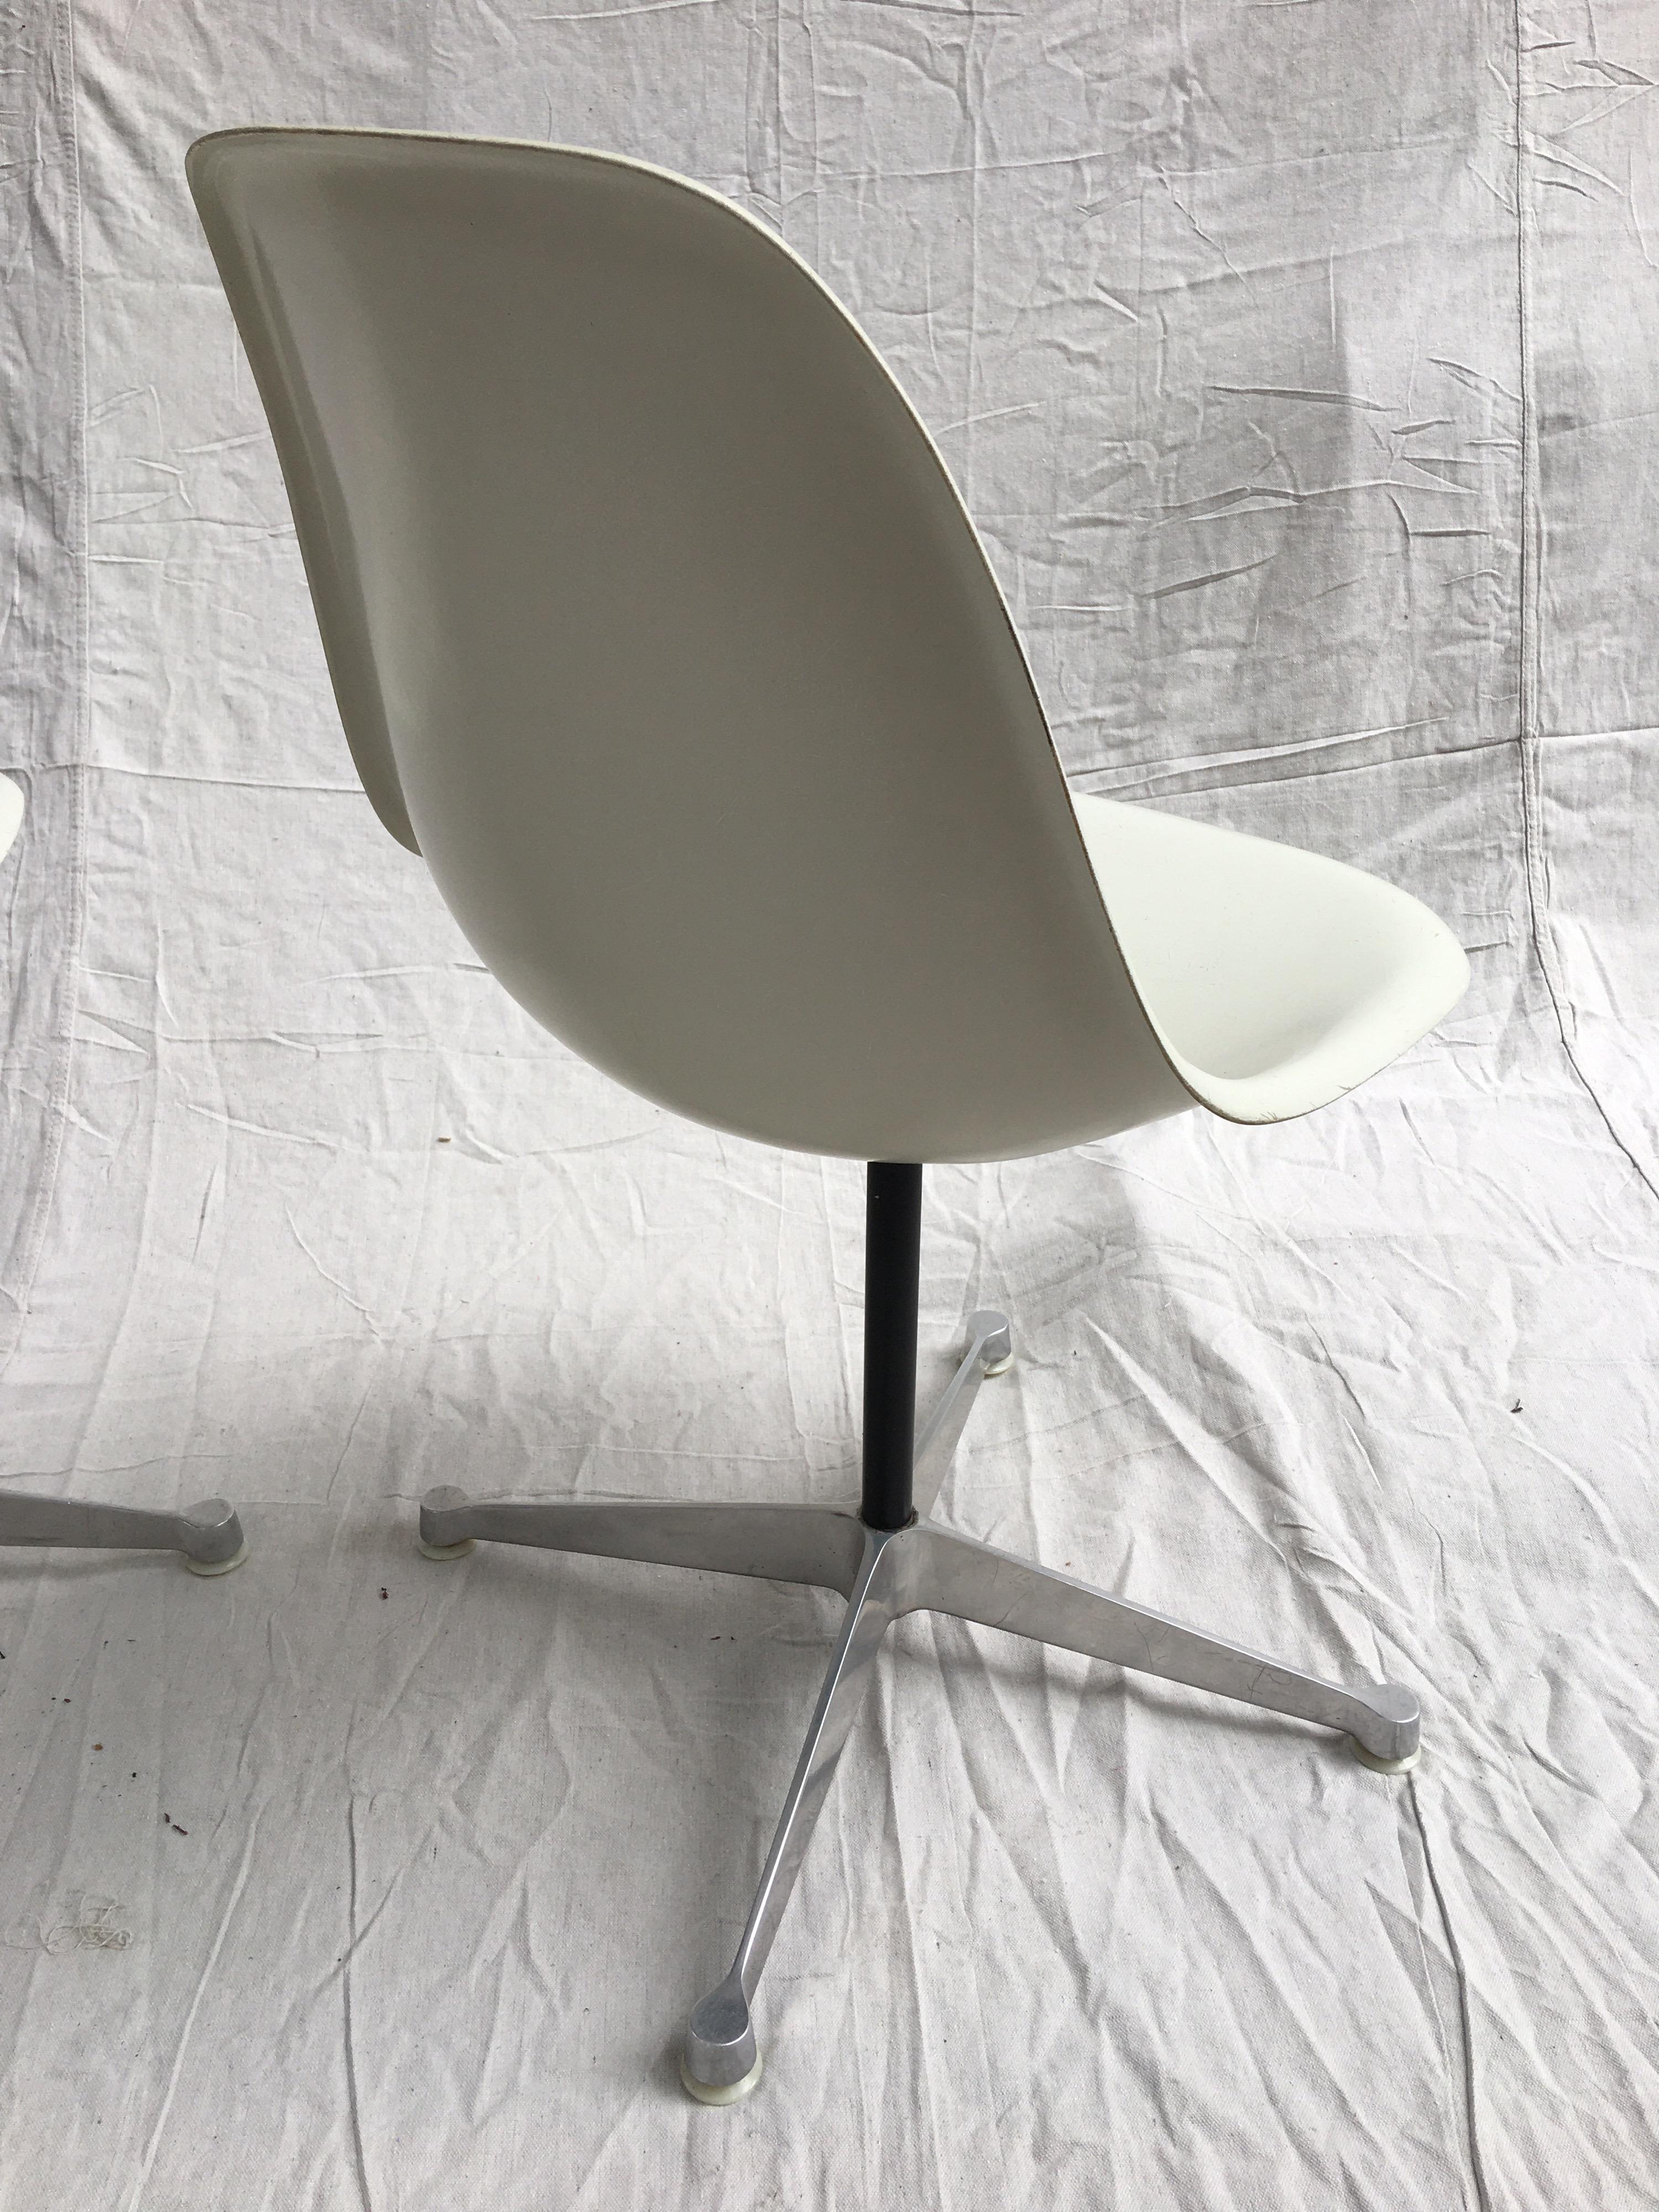 American  Eames for Herman Miller Fiberglass Chair  1 CHAIR LEFT!